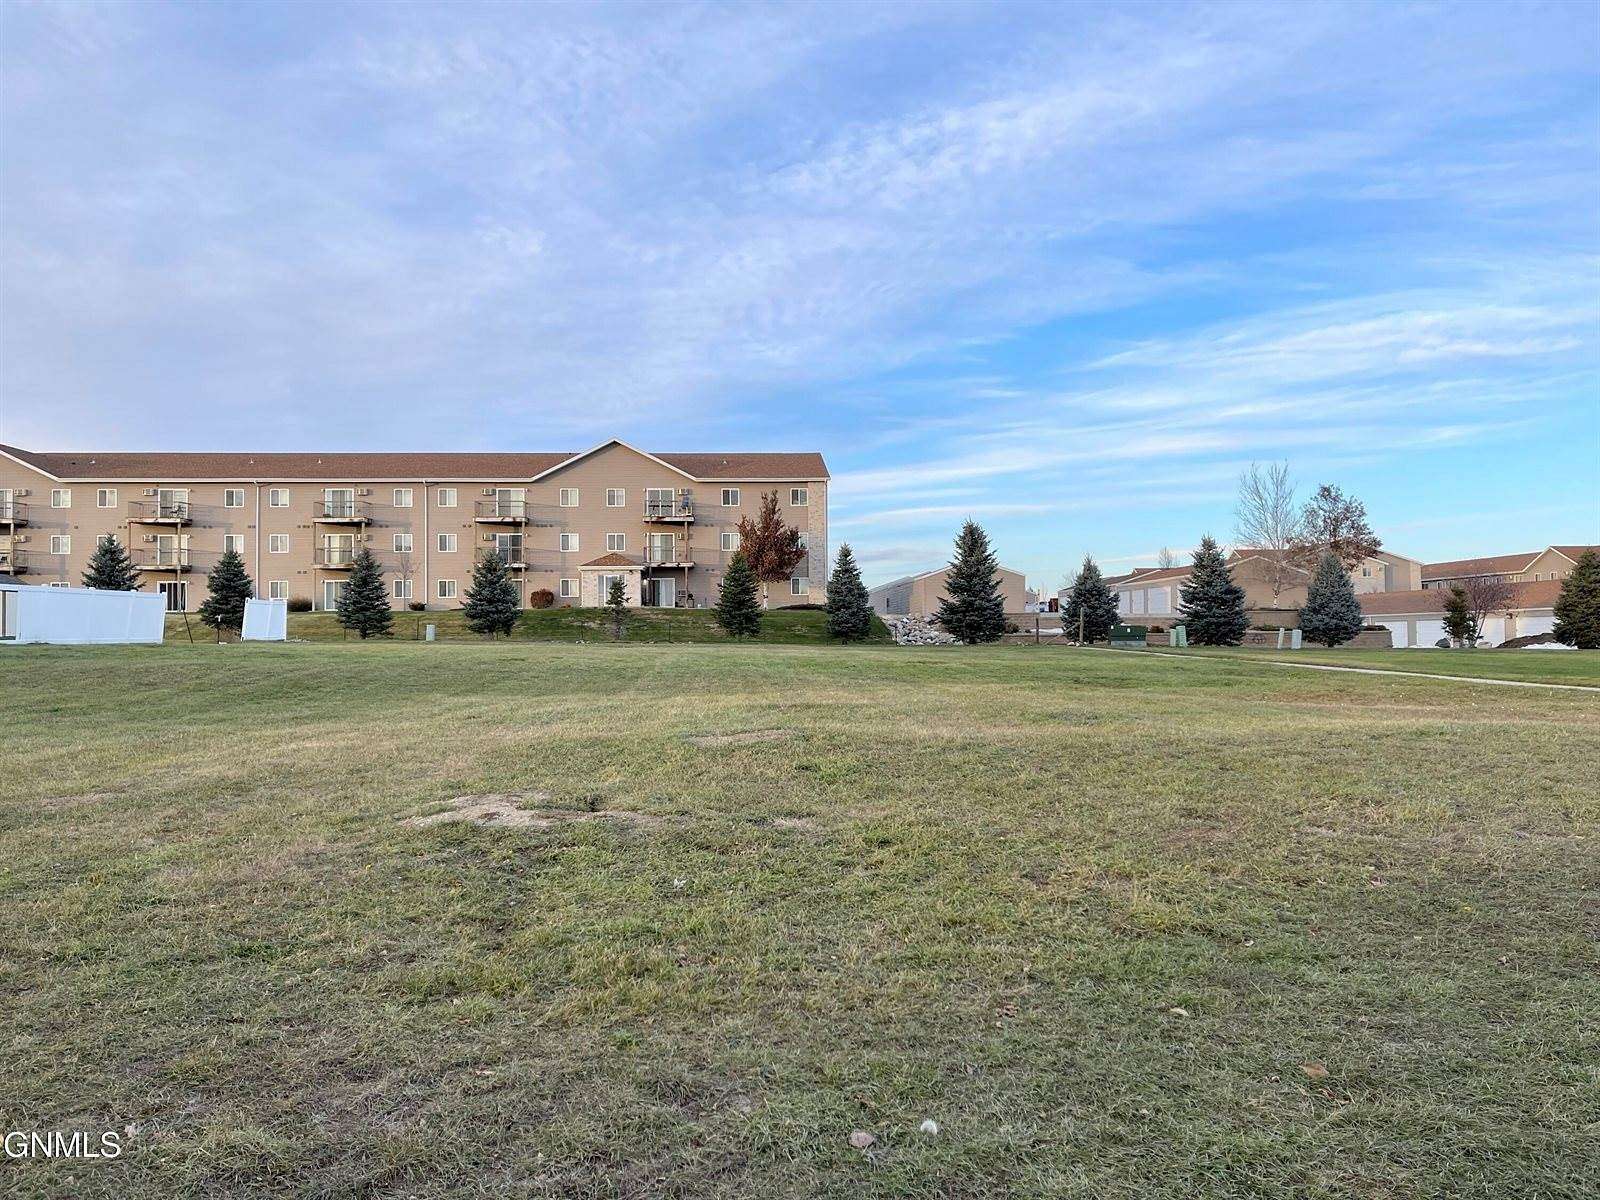 0.47 Acres of Land for Sale in Williston, North Dakota